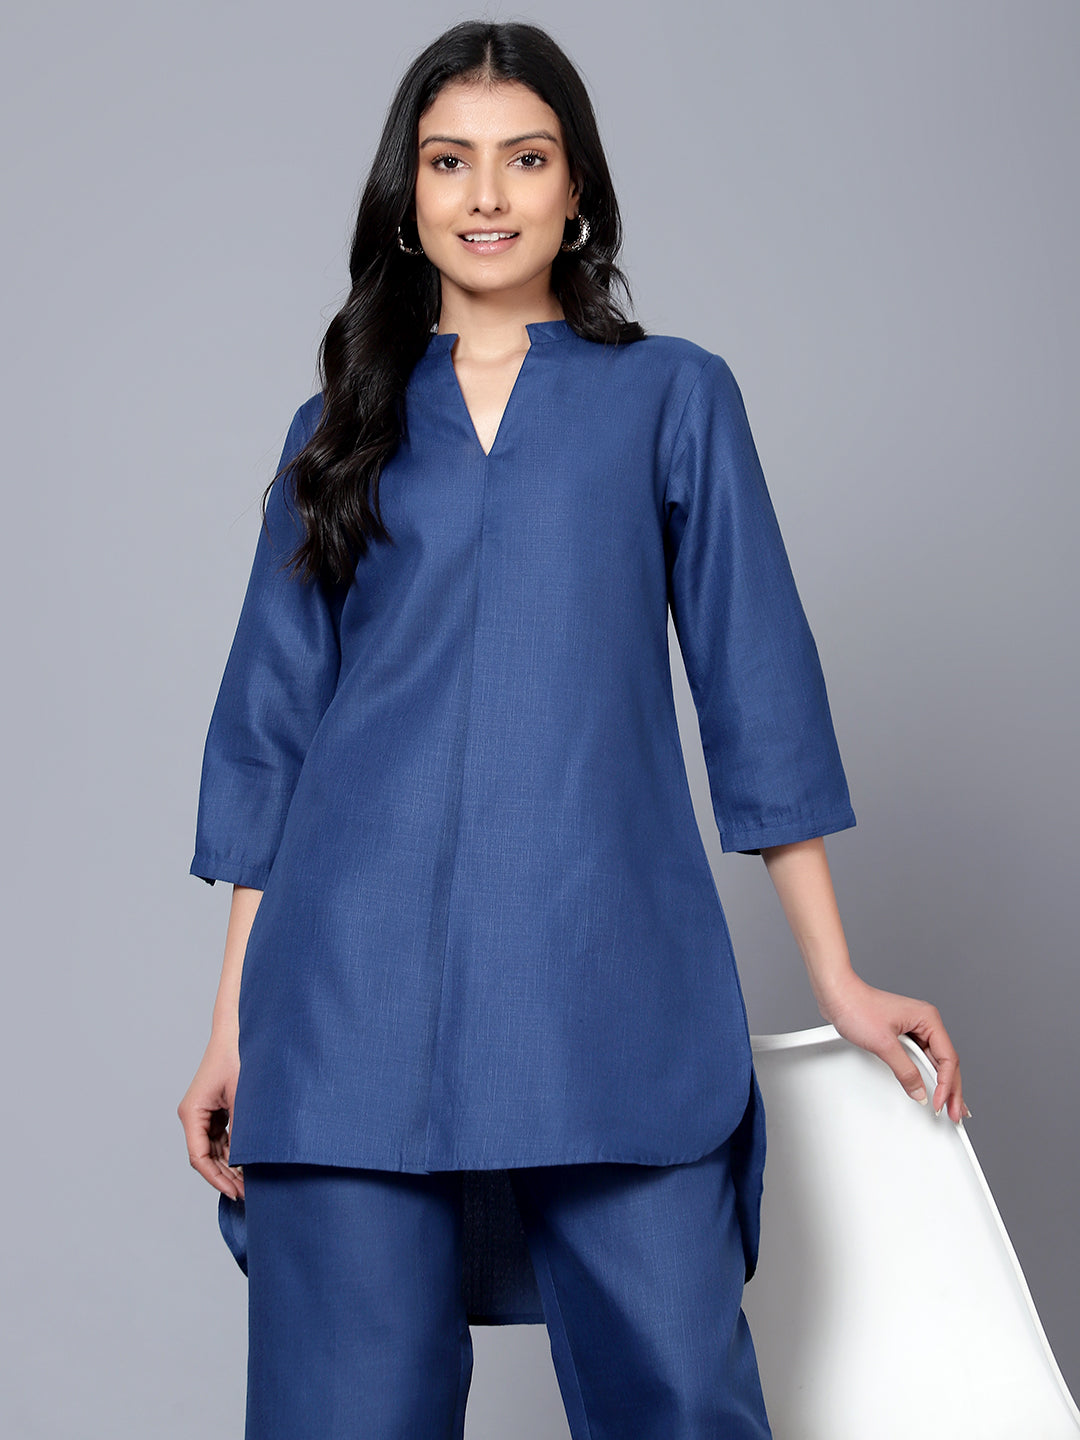 Buy Blue Designer Co-ord Set for Women, Contemporary Ethnic Wear